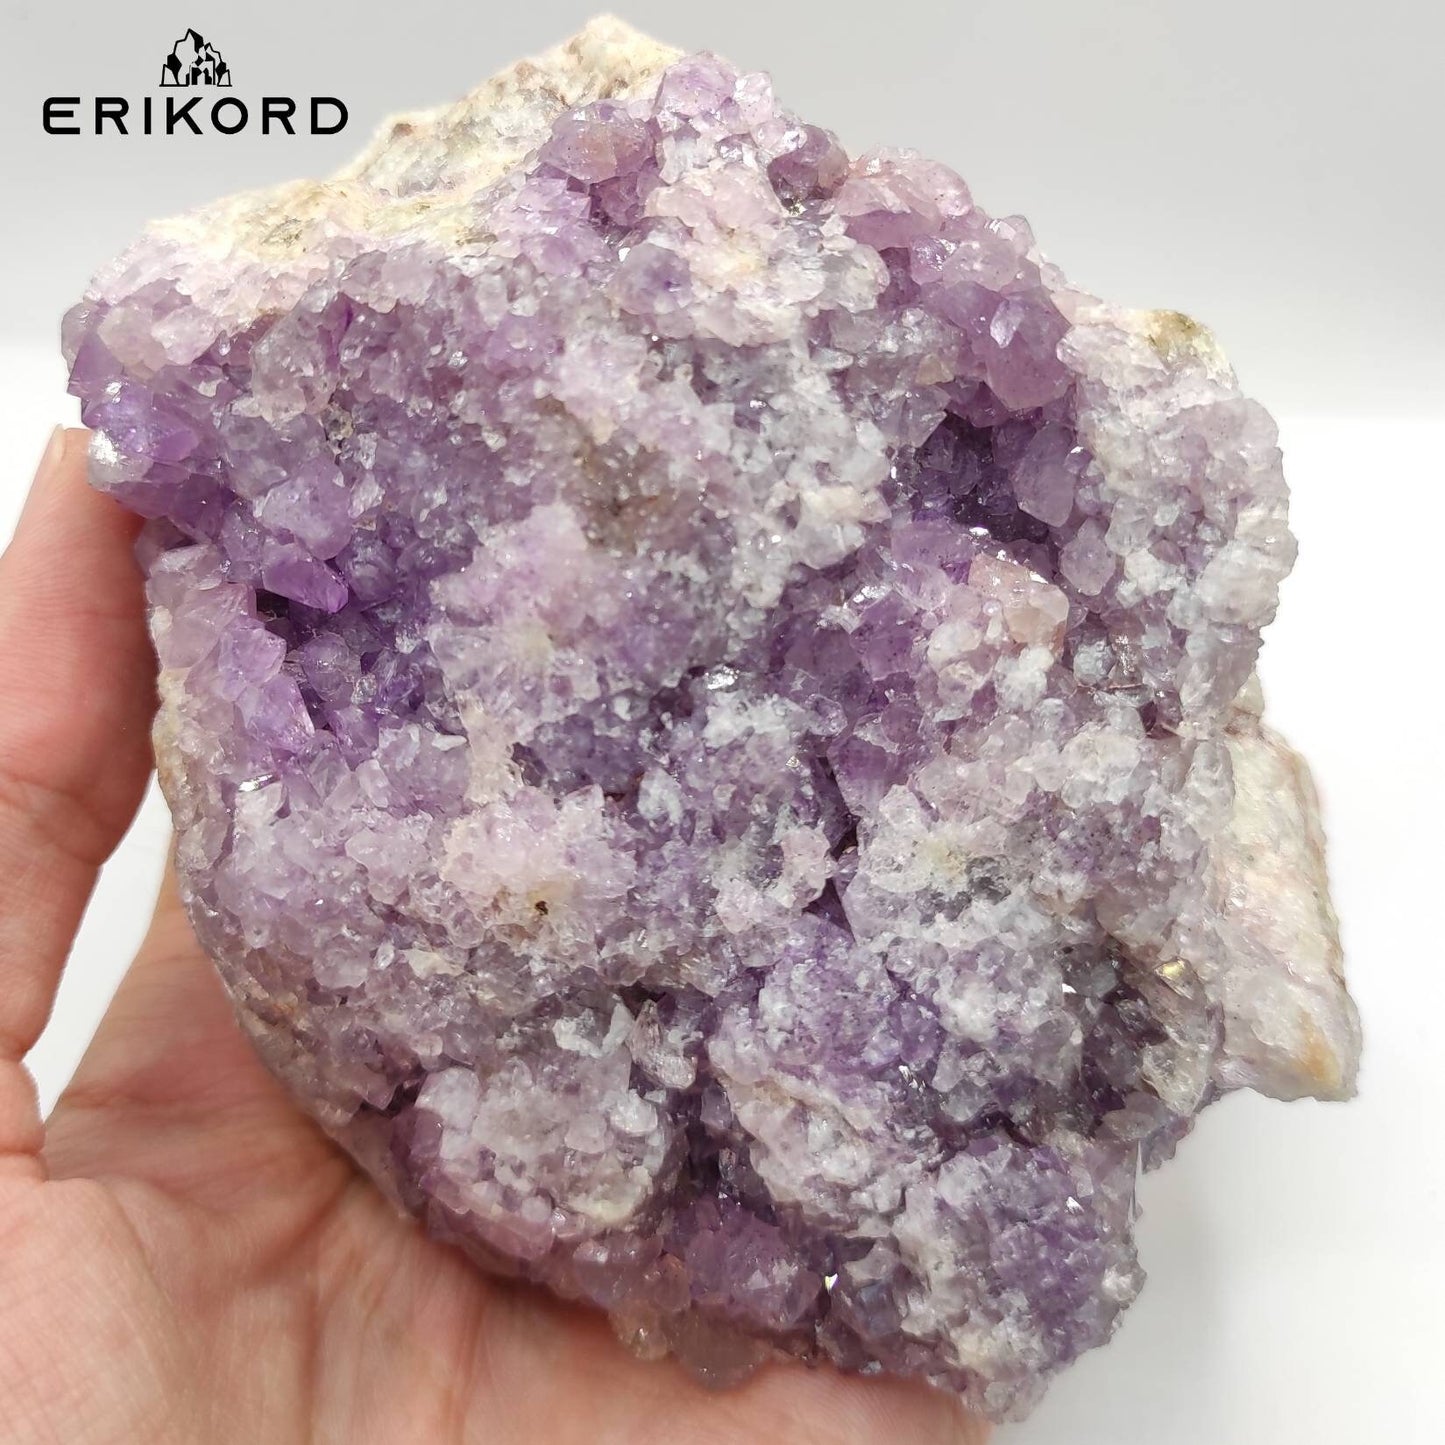 857g Thunder Bay Amethyst Crystal - Natural Amethyst Mineral Specimen - Ontario Canada - Spirit Quartz Style Amethyst - Raw Ethical Crystals